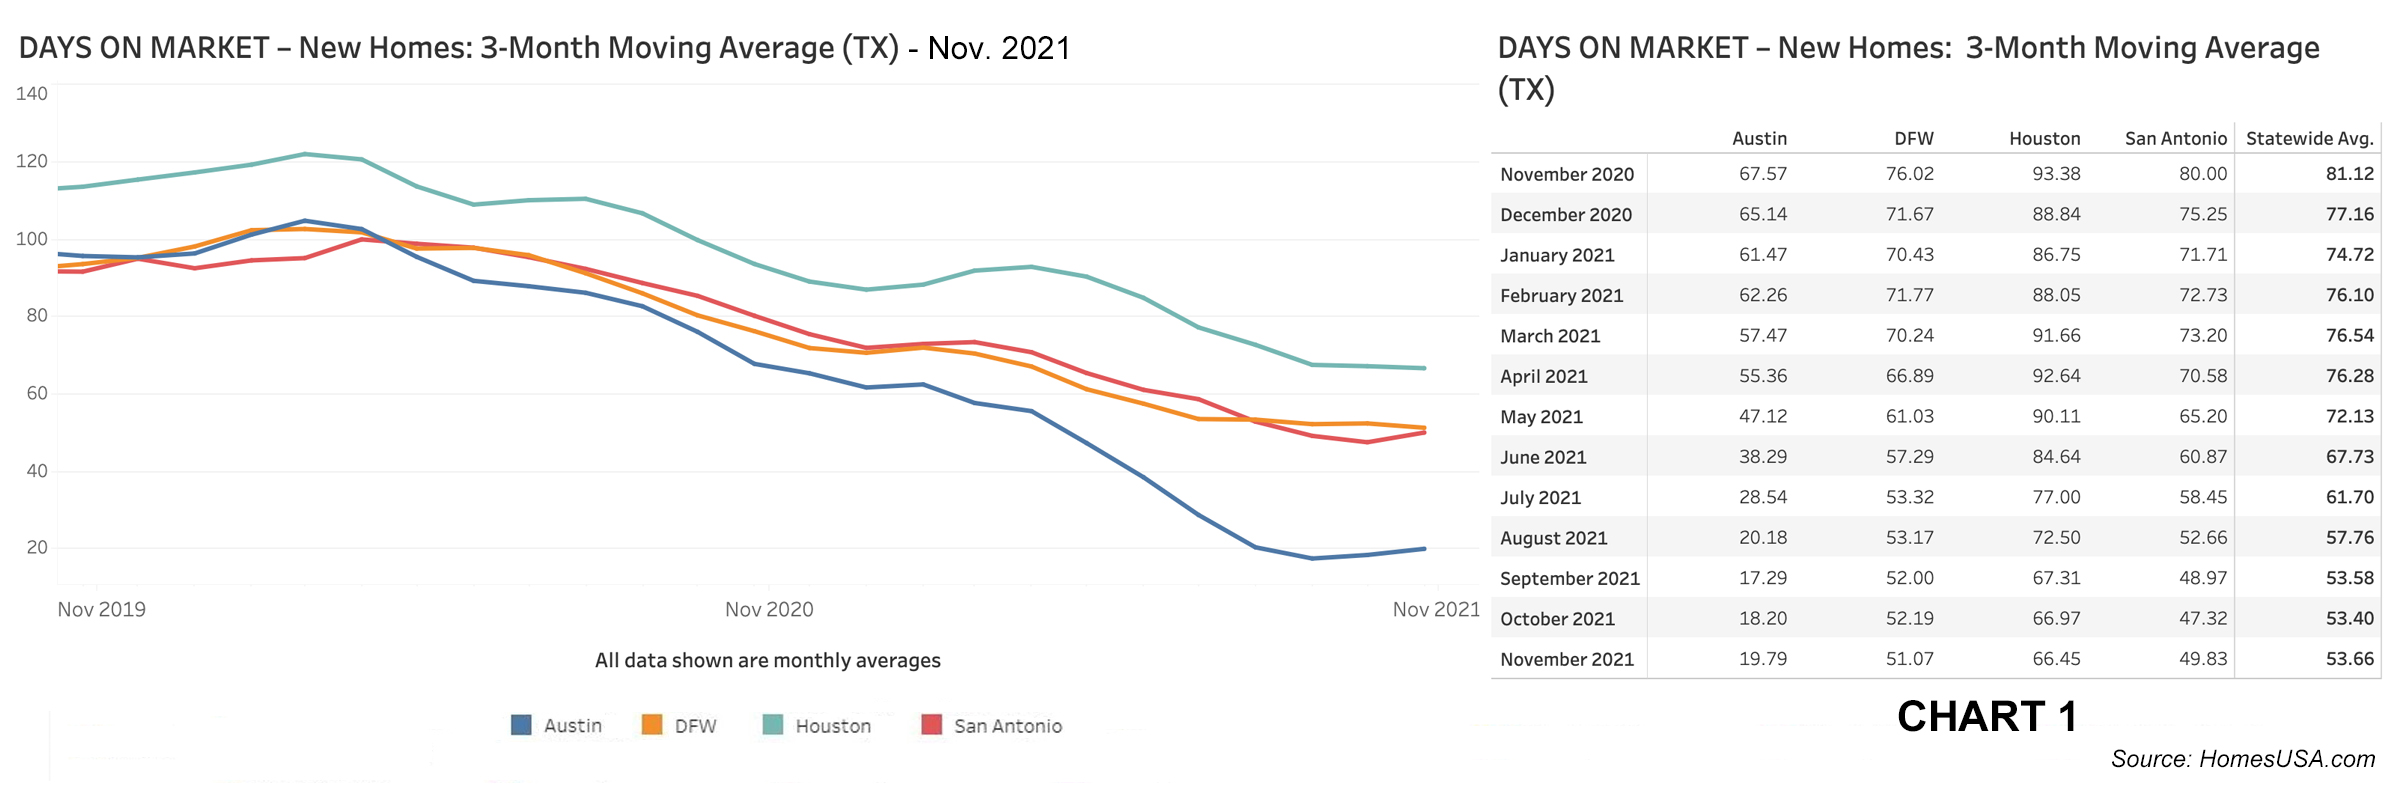 Chart 1: Texas New Homes - Days on Market – Nov. 2021